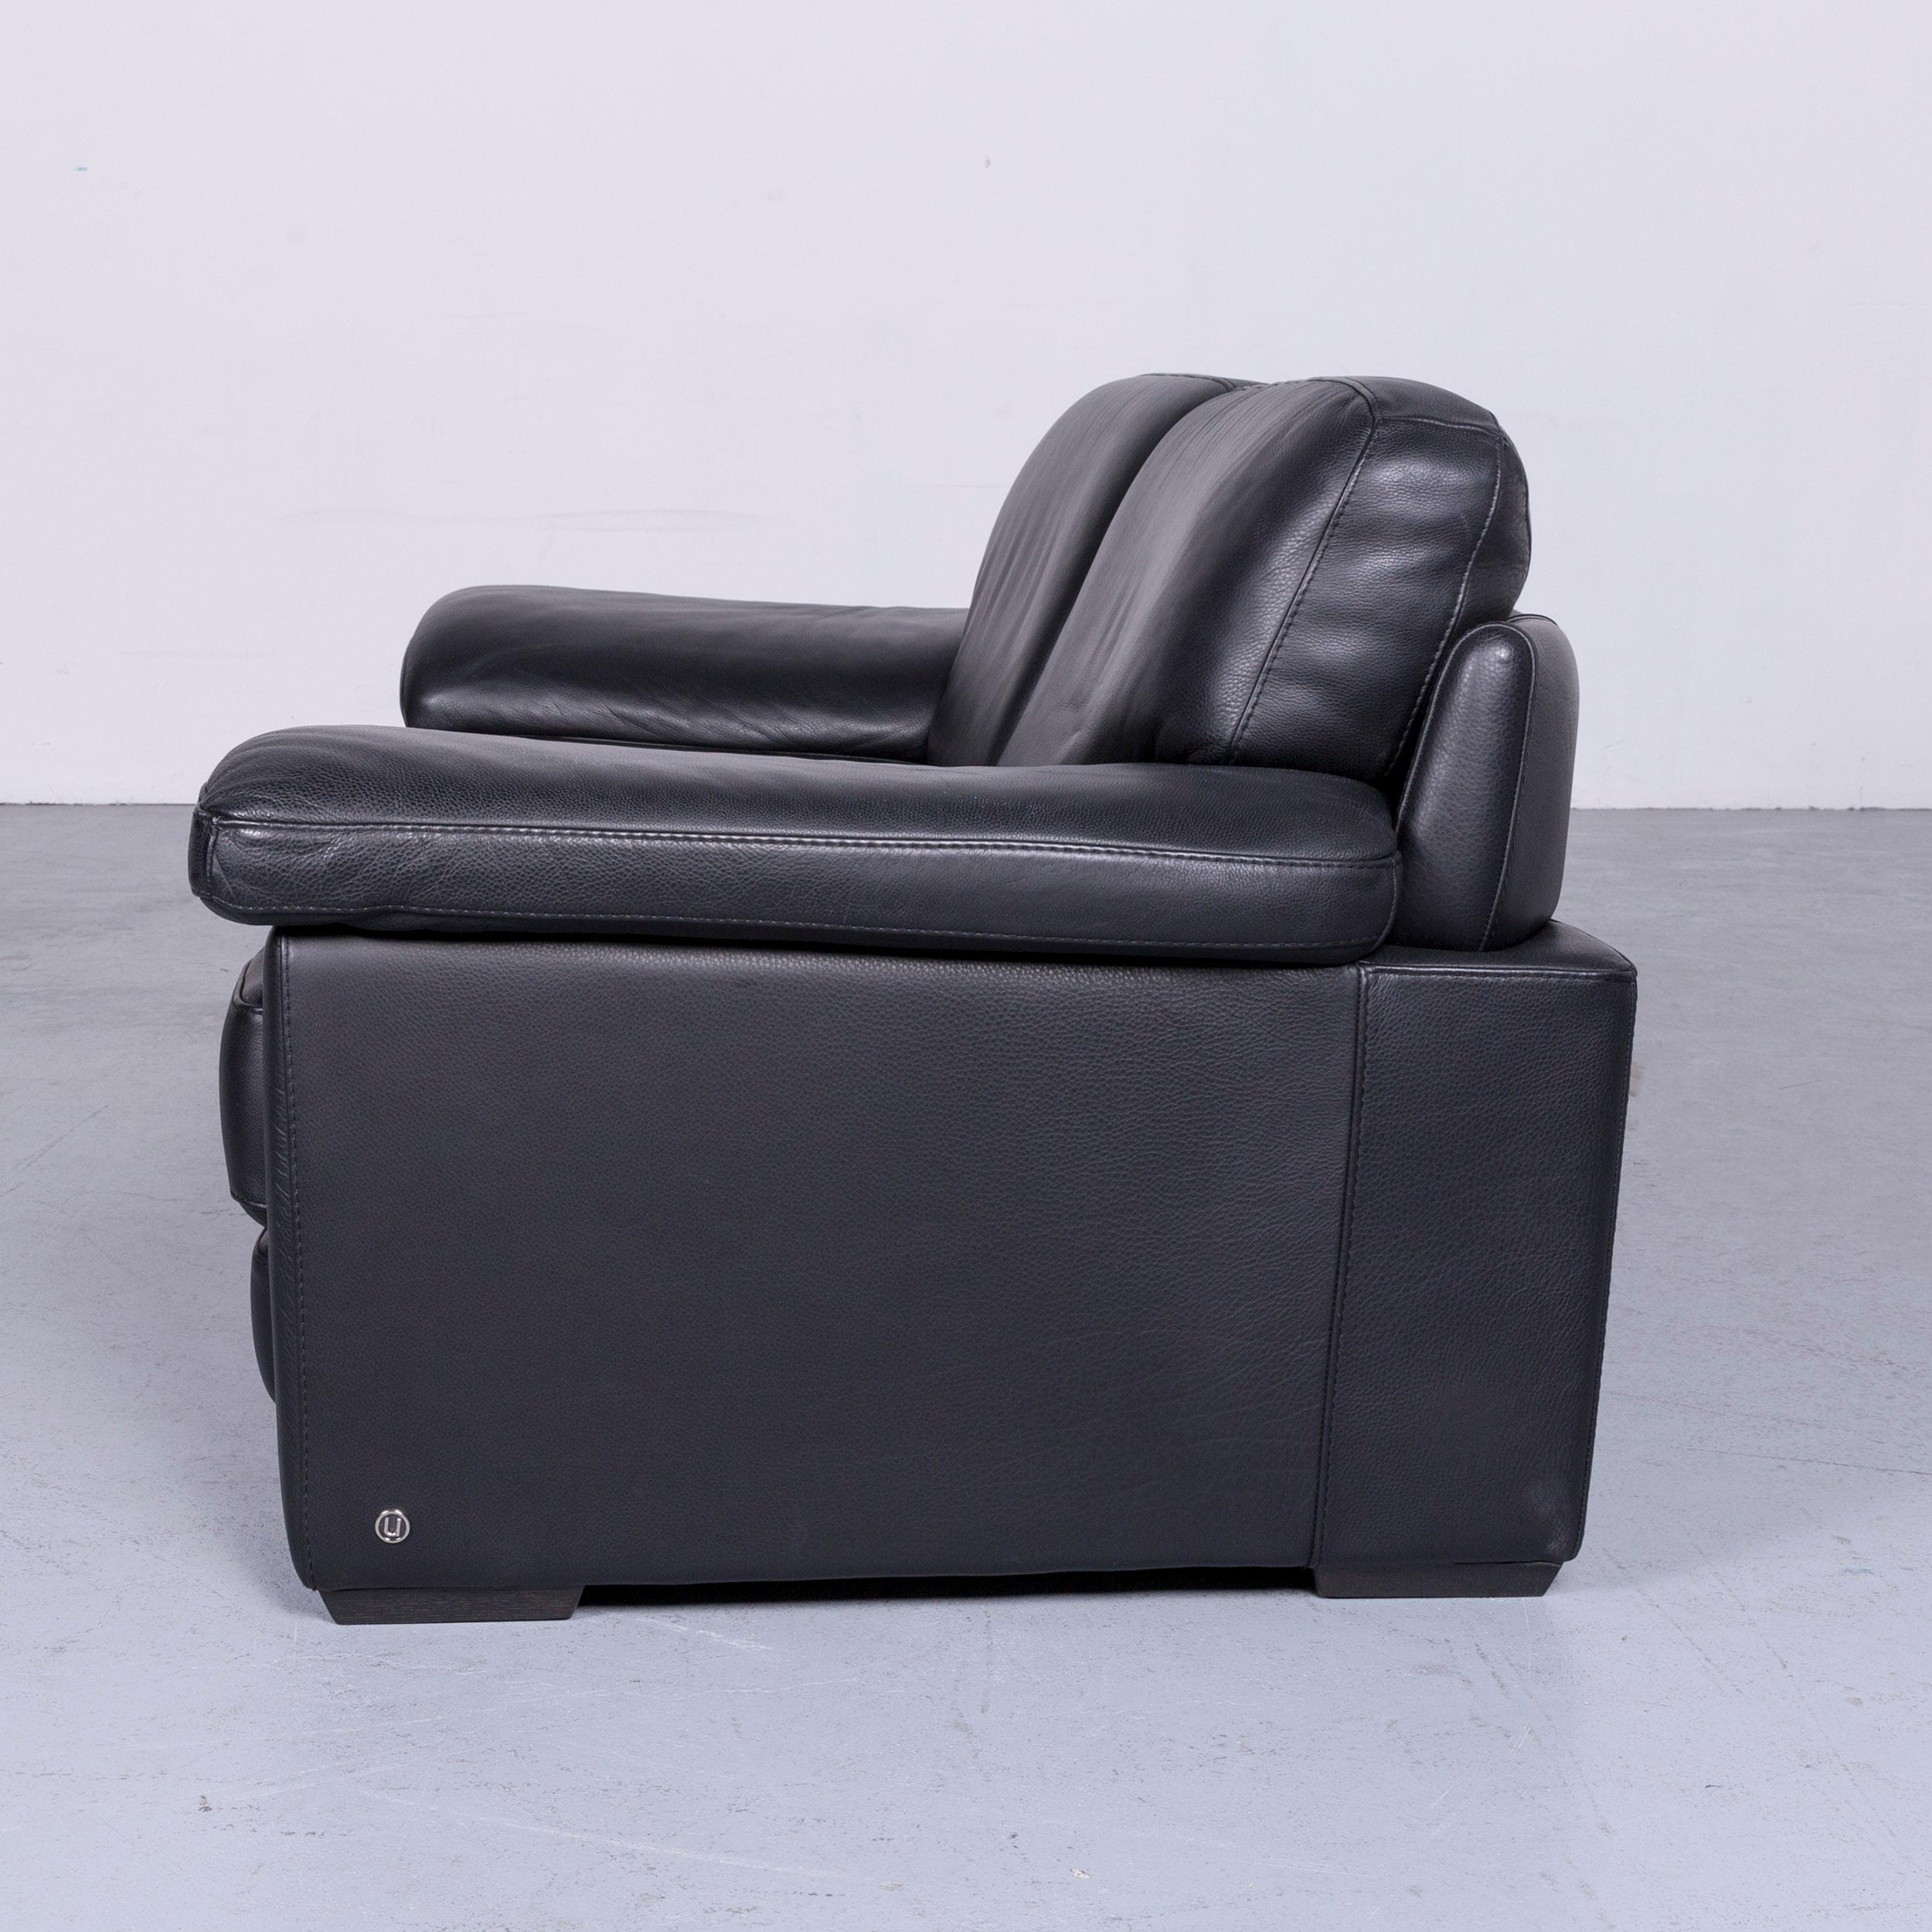 Natuzzi Designer Leather Three-Seat Sofa Couch in Black 5